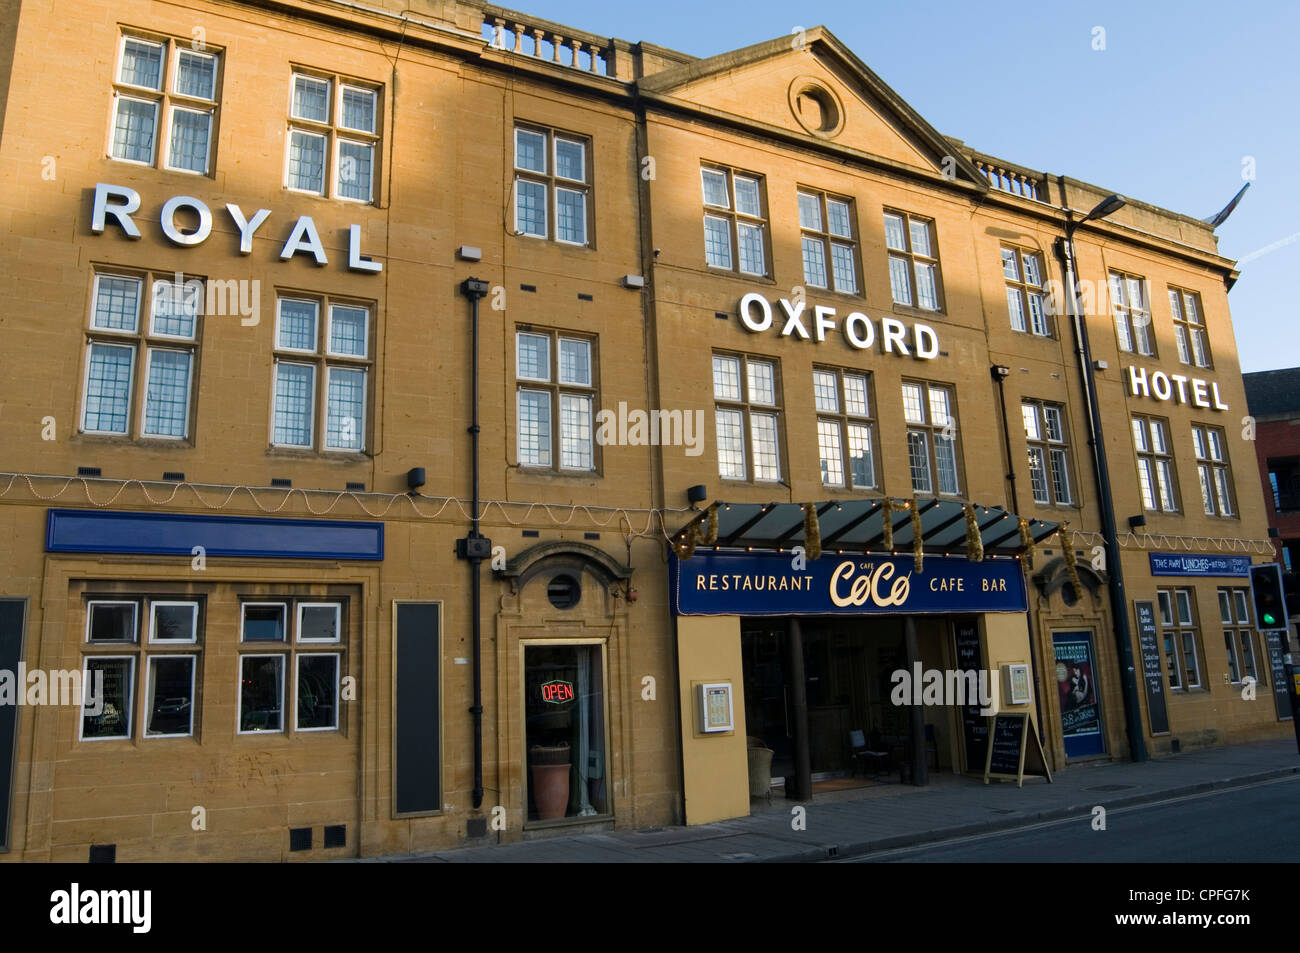 royal oxford hotel uk regional local business Stock Photo